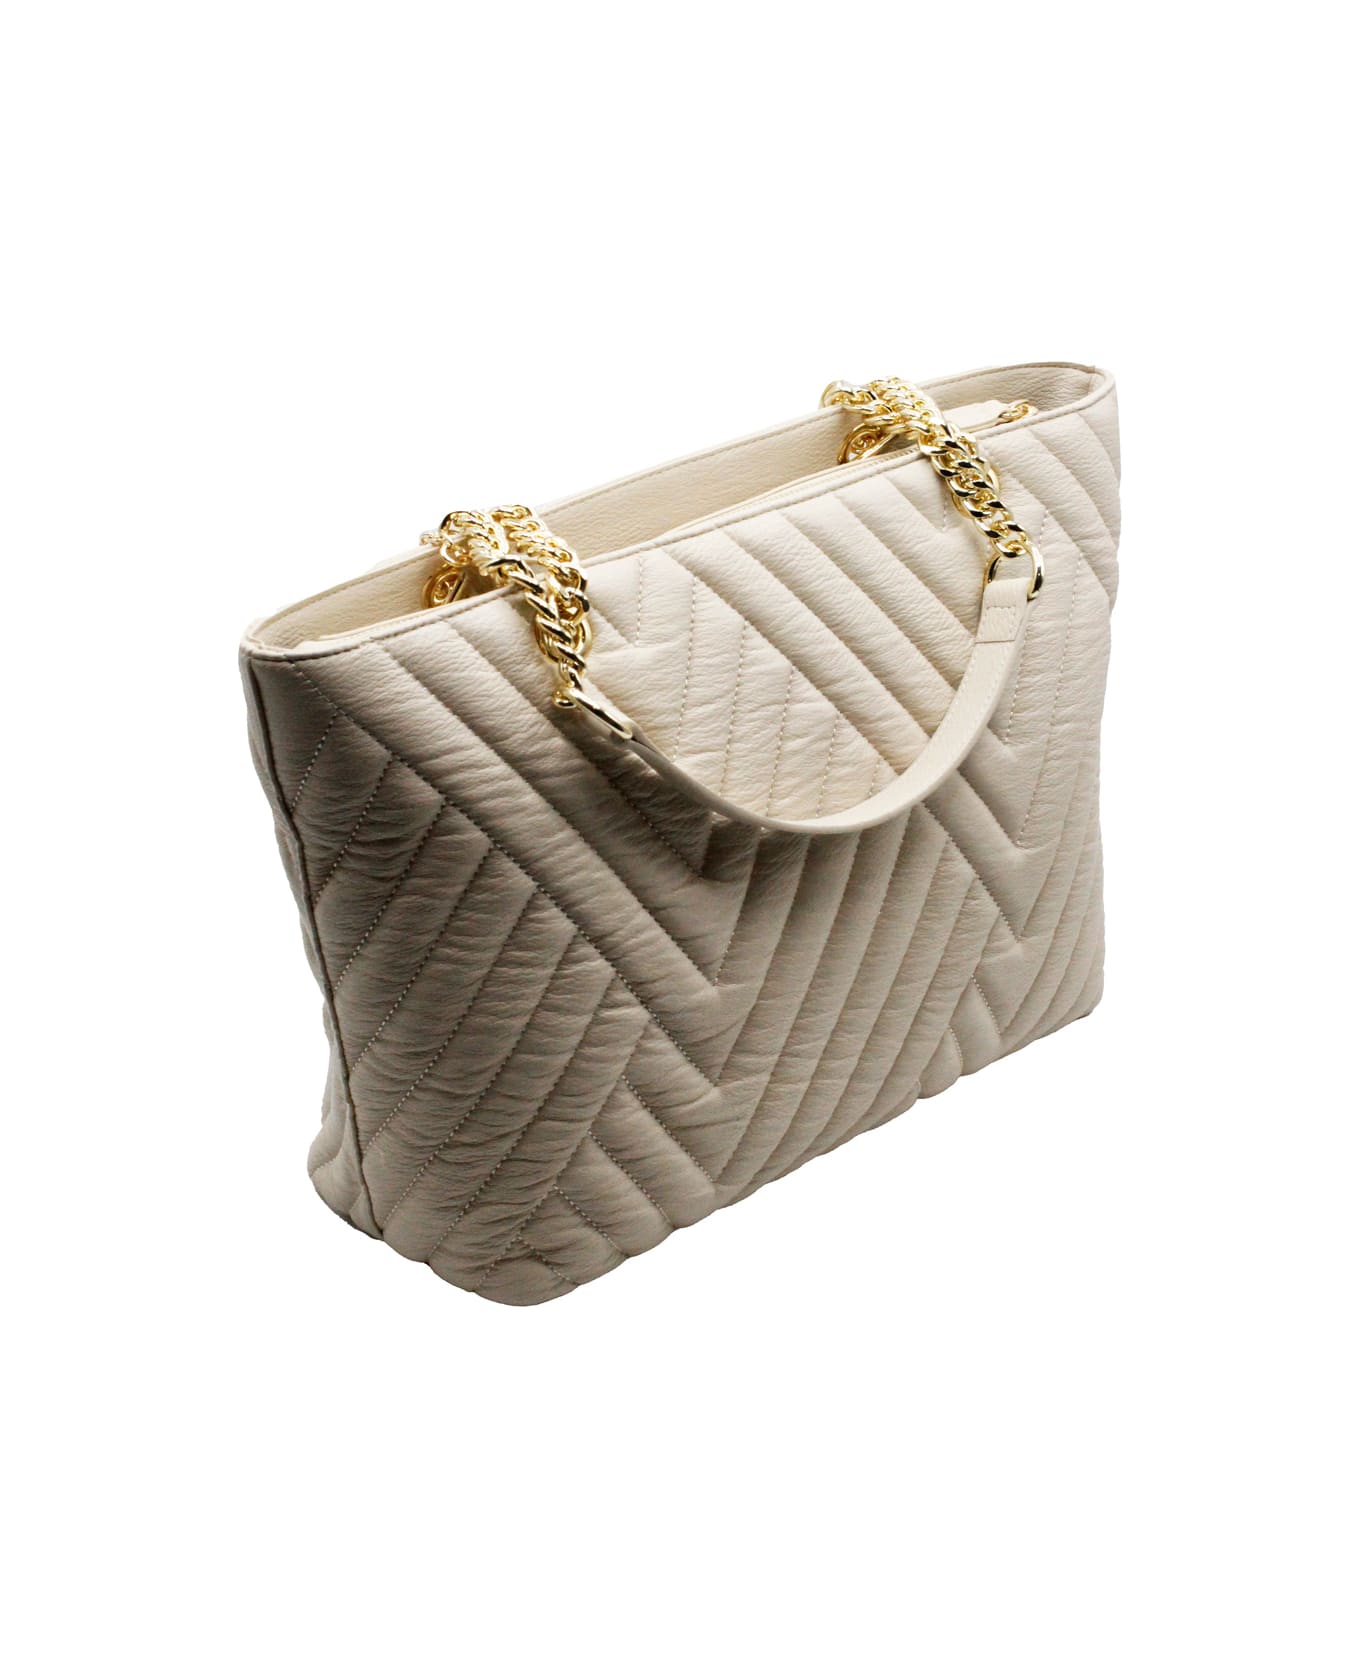 Armani Collezioni Eco-leather Matelassé Shopping Bag With Zip Closure And Chain Handles, Size 31x27x12 - Beige